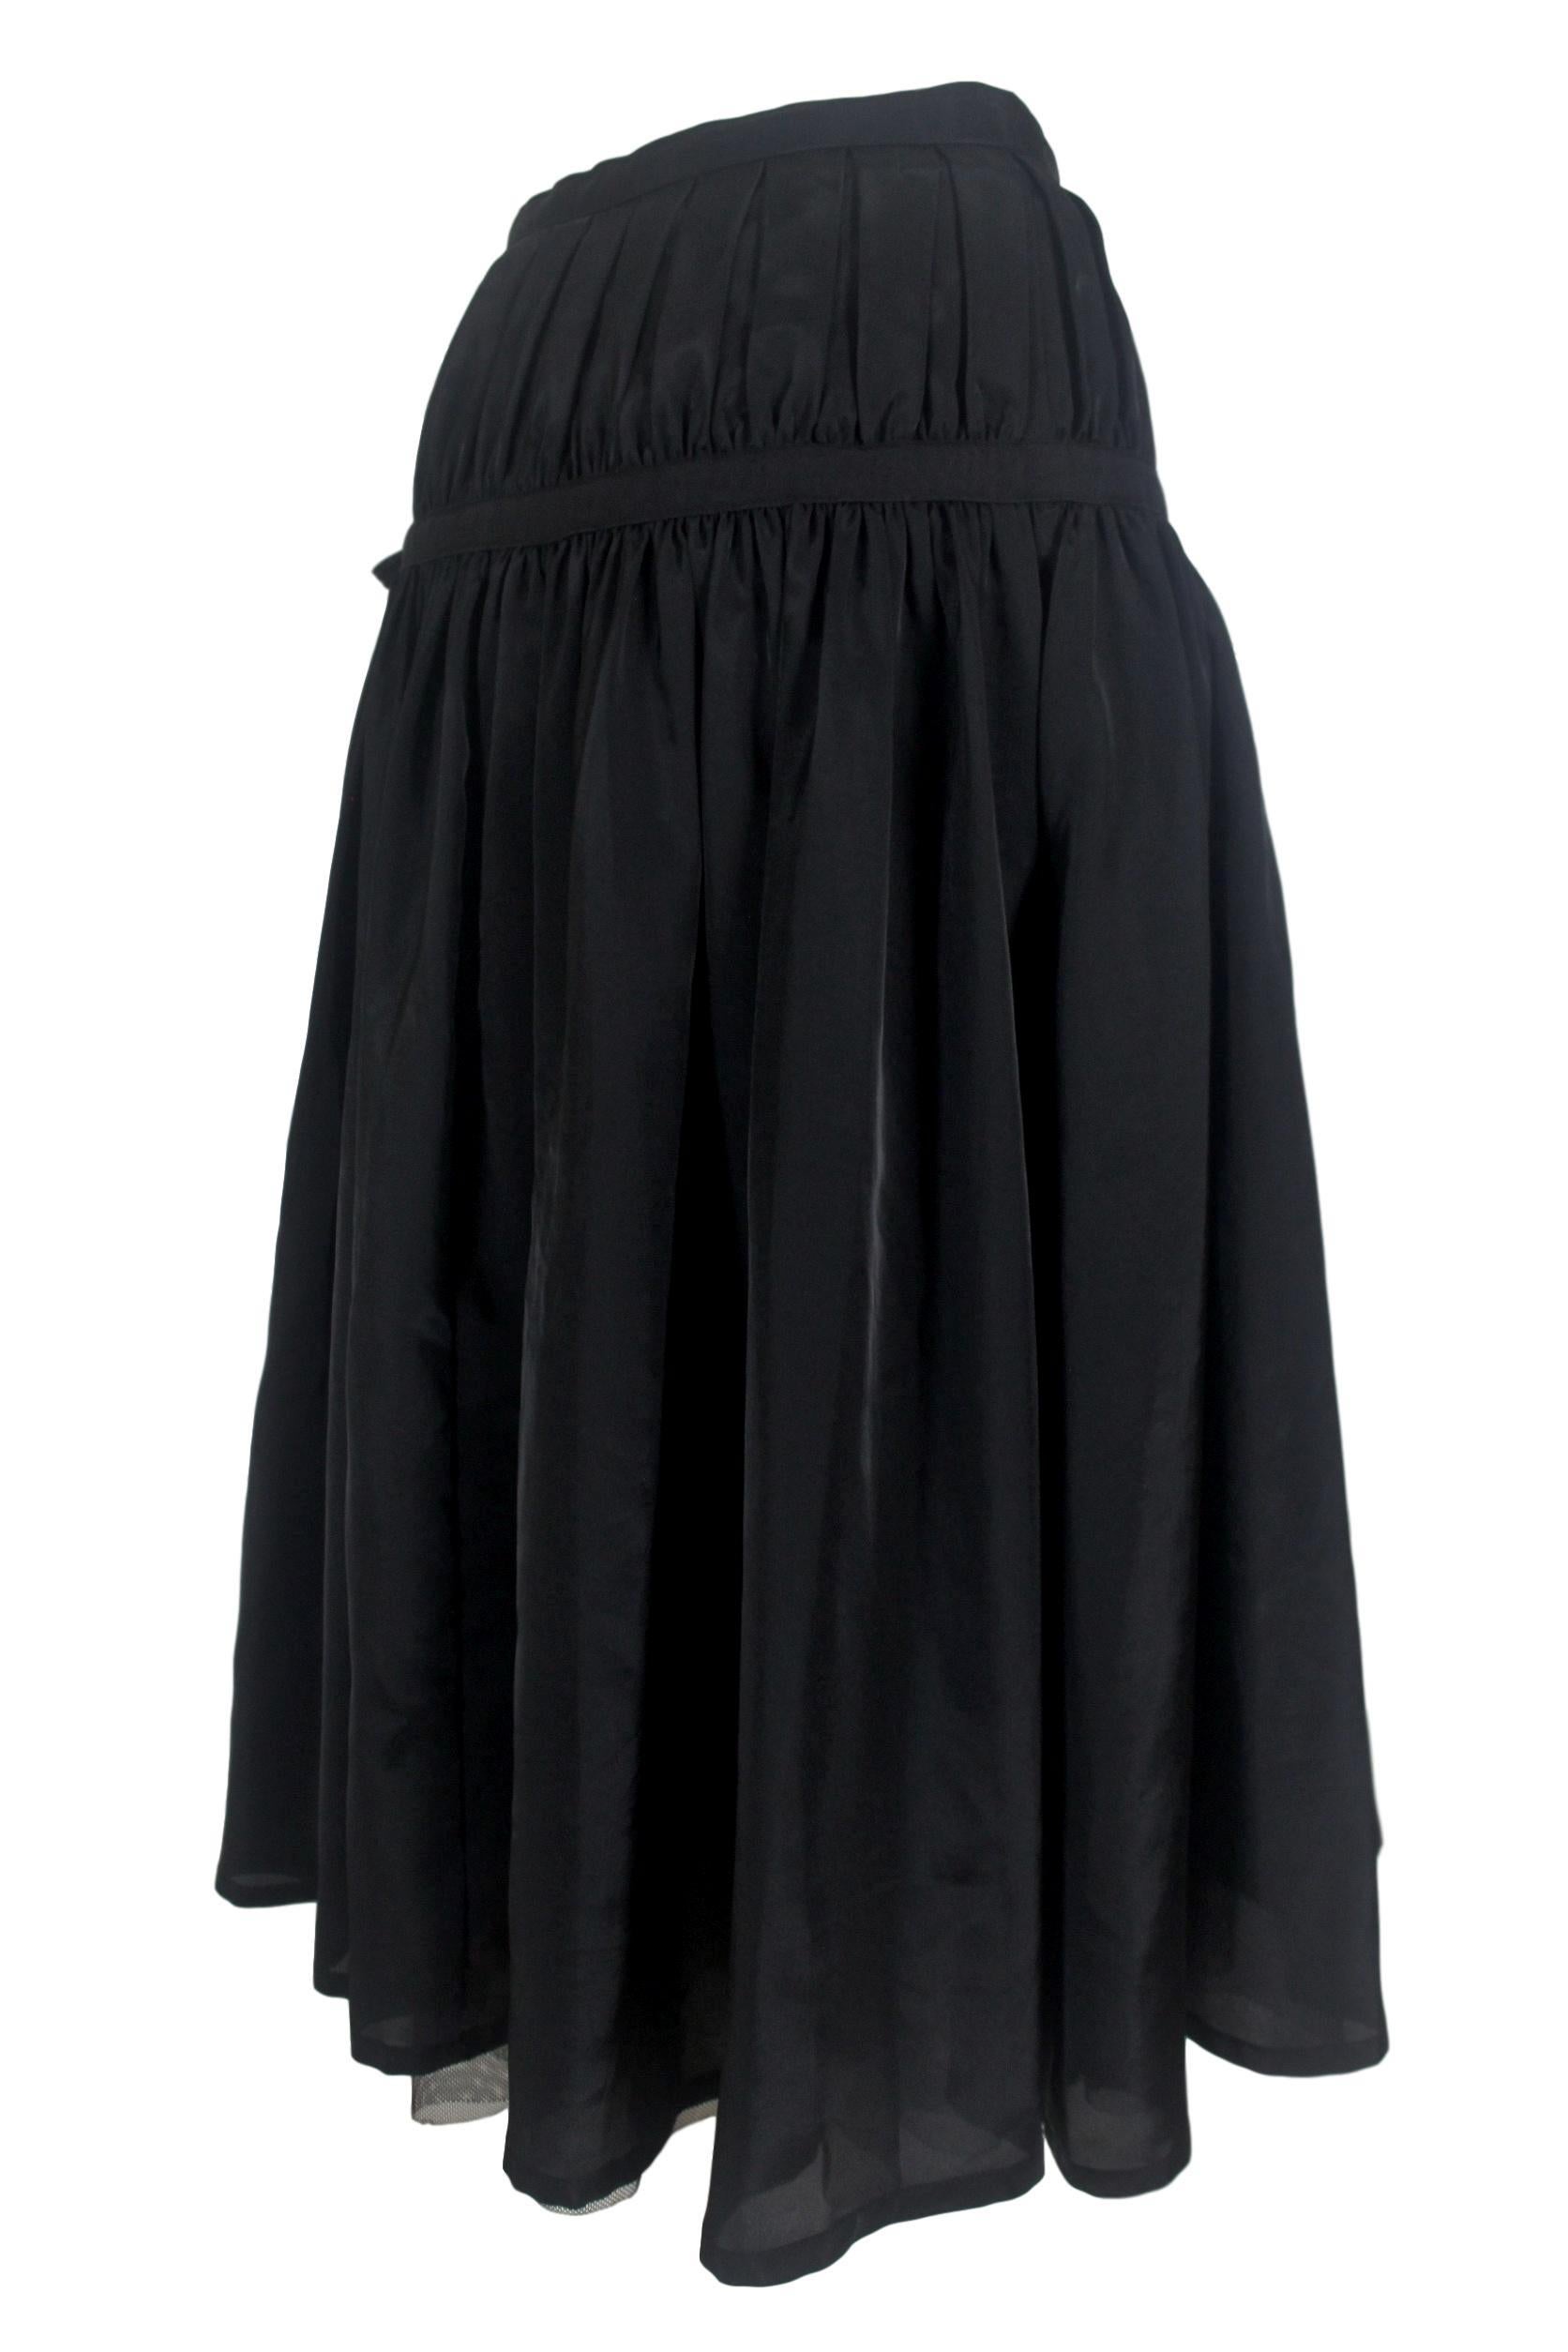 Comme des Garcons Tricot Double Layer Wrap Skirt 2007 For Sale 1